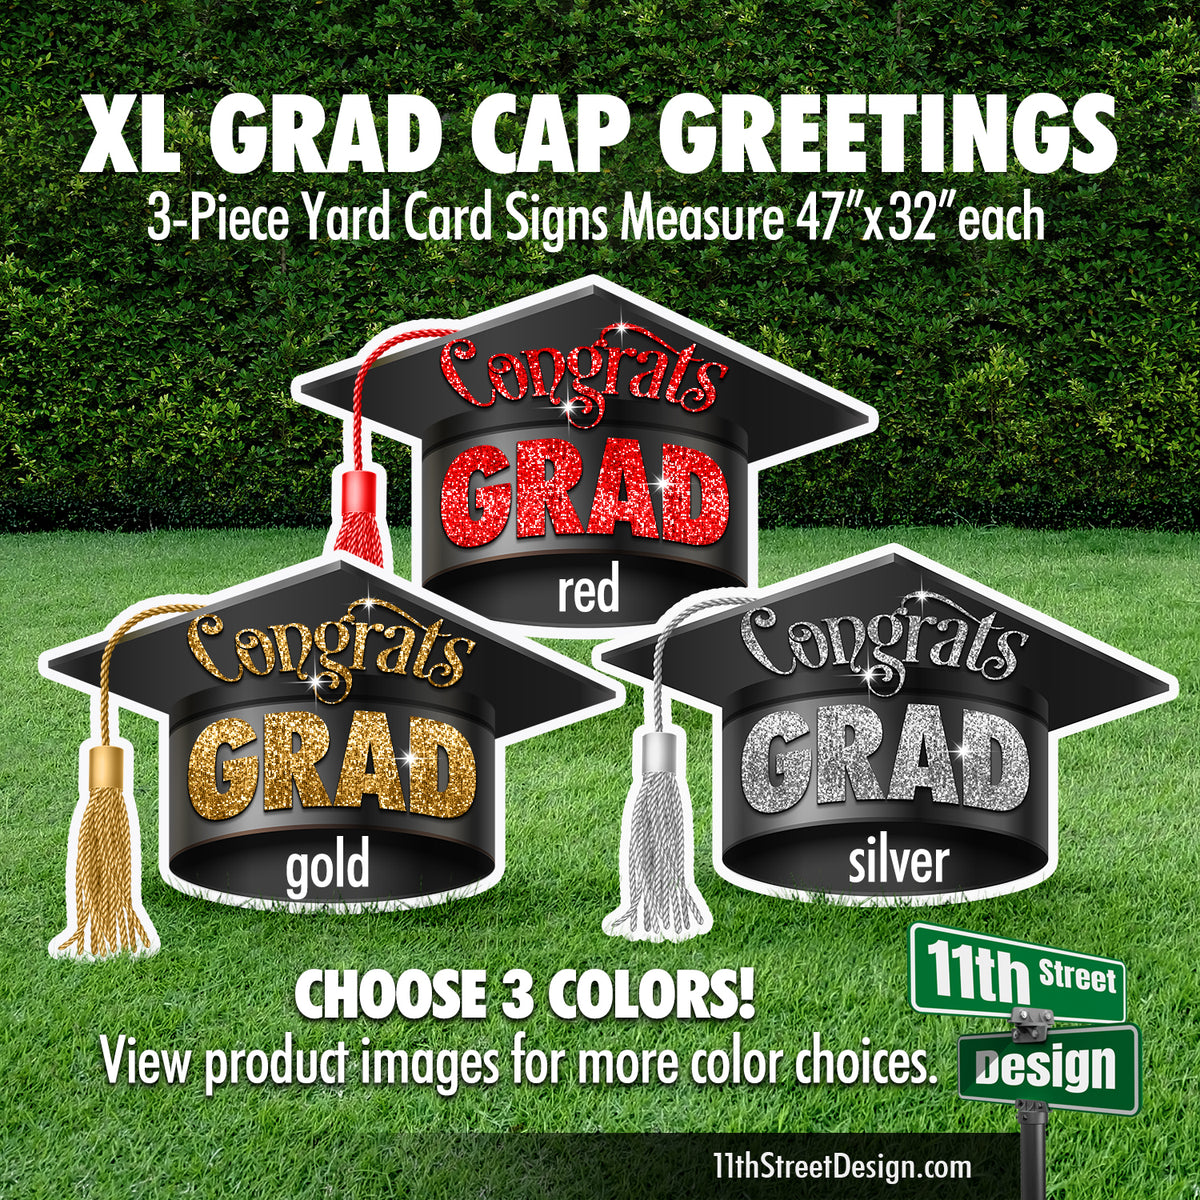 XL Grad Cap Greetings Yard Card Setup Signs for Graduations - Choose your colors!